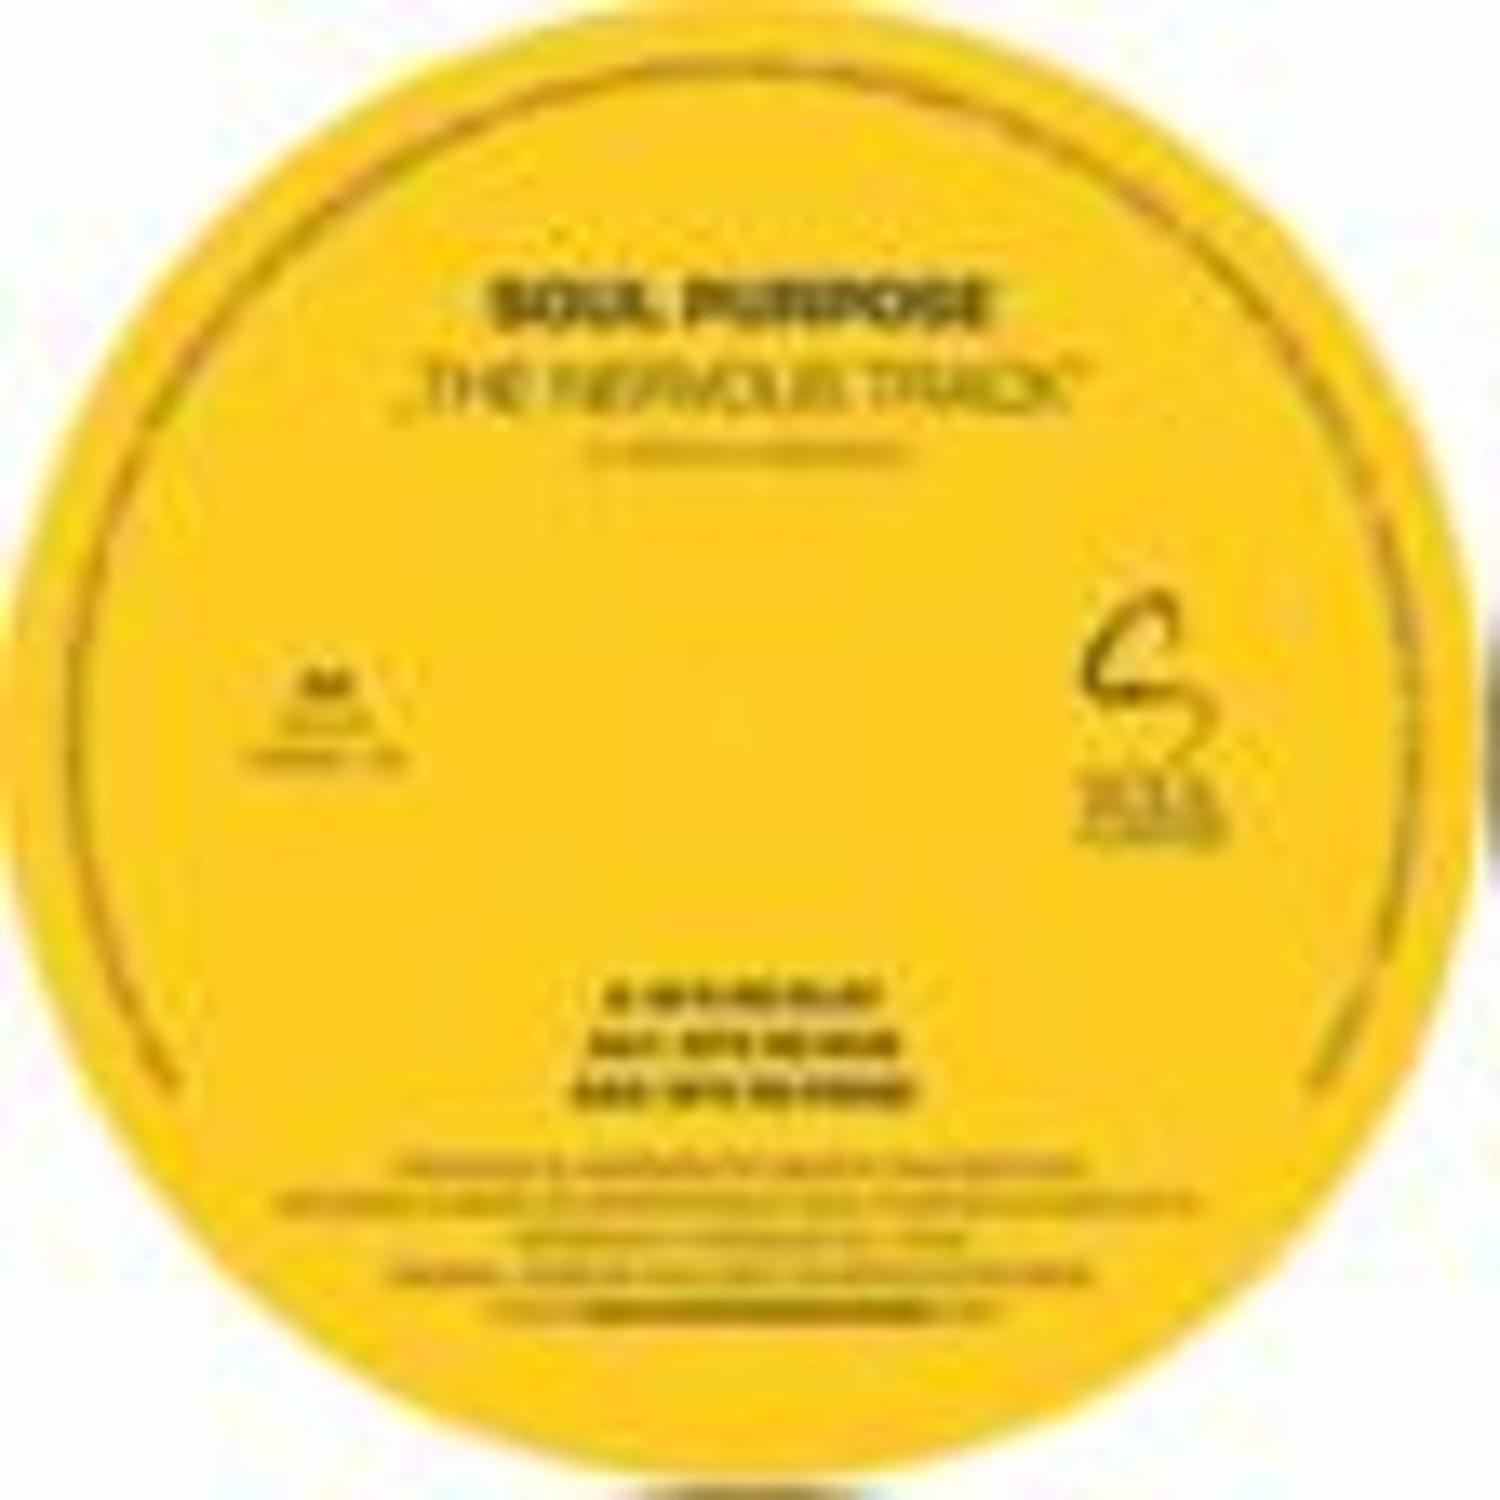 Soul Purpose - THE NERVOUS TRACK